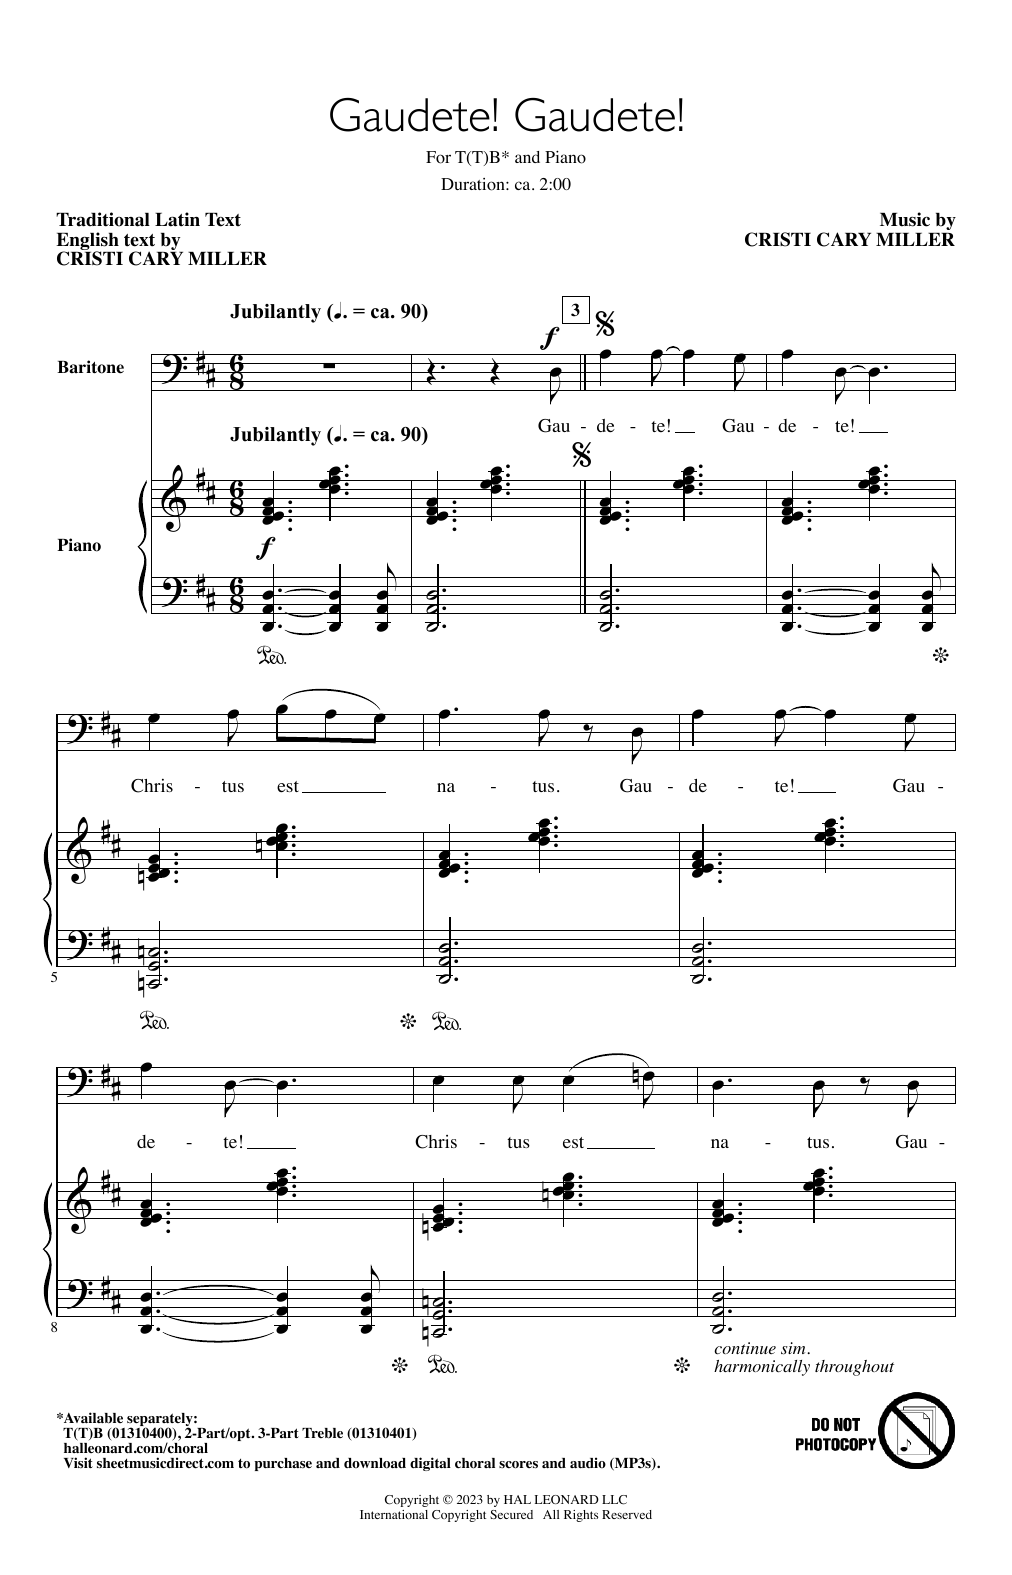 Cristi Cary Miller Gaudete! Gaudete! Sheet Music Notes & Chords for 2-Part Choir, 3-Part Mixed Choir - Download or Print PDF